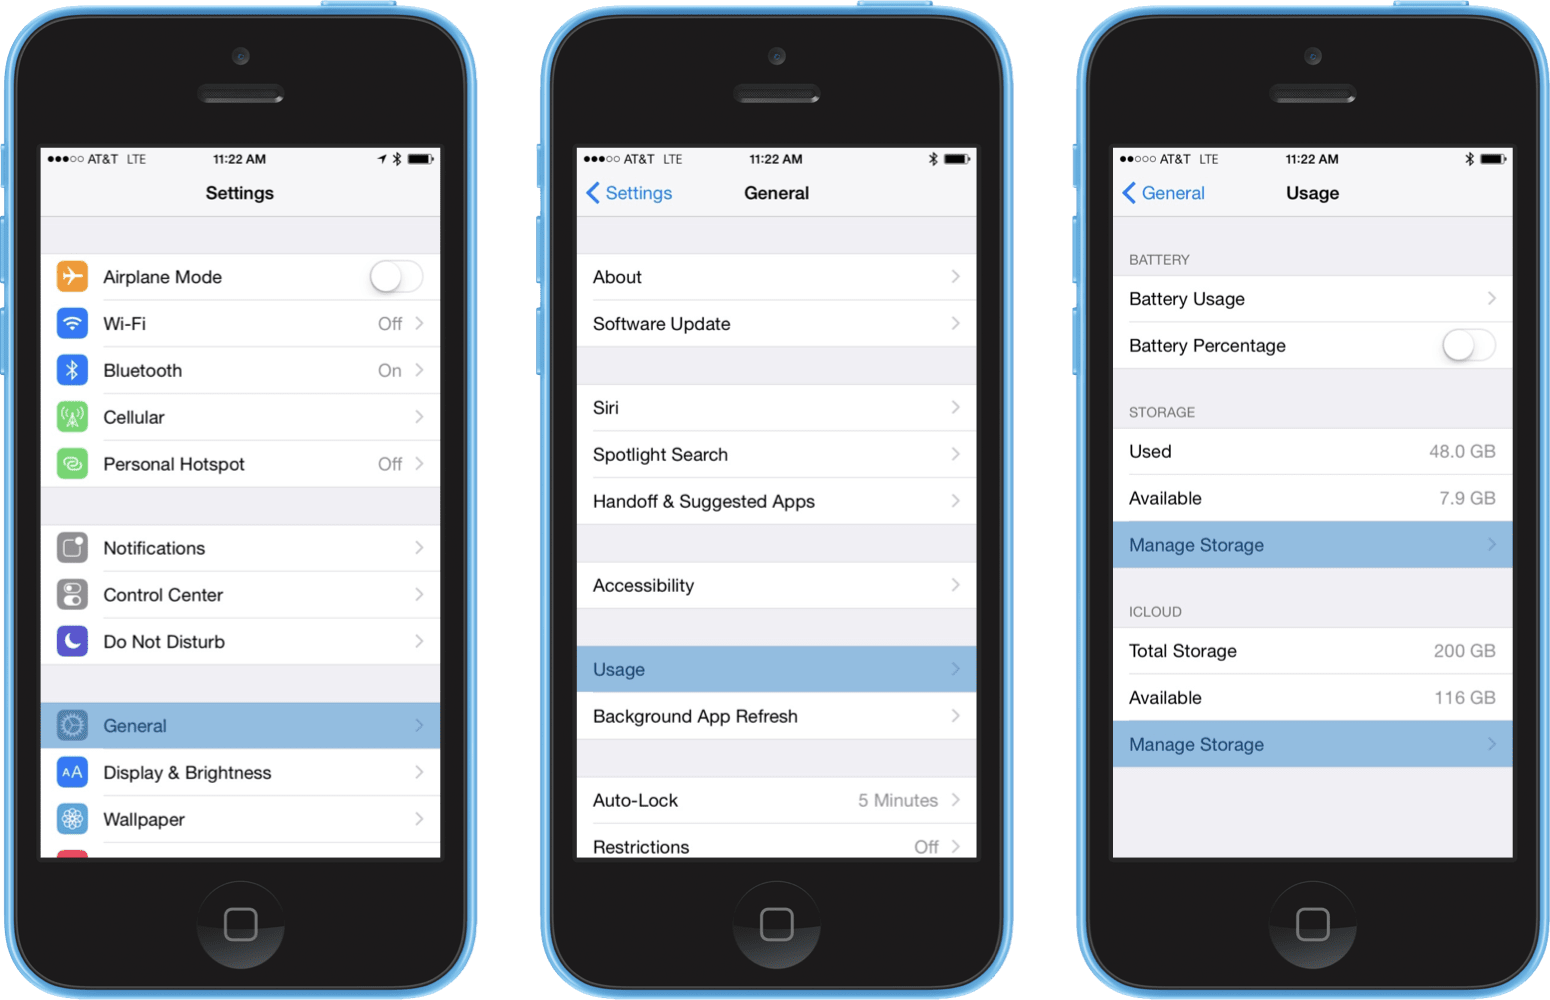 iOS Settings screenshots showing "Usage" location